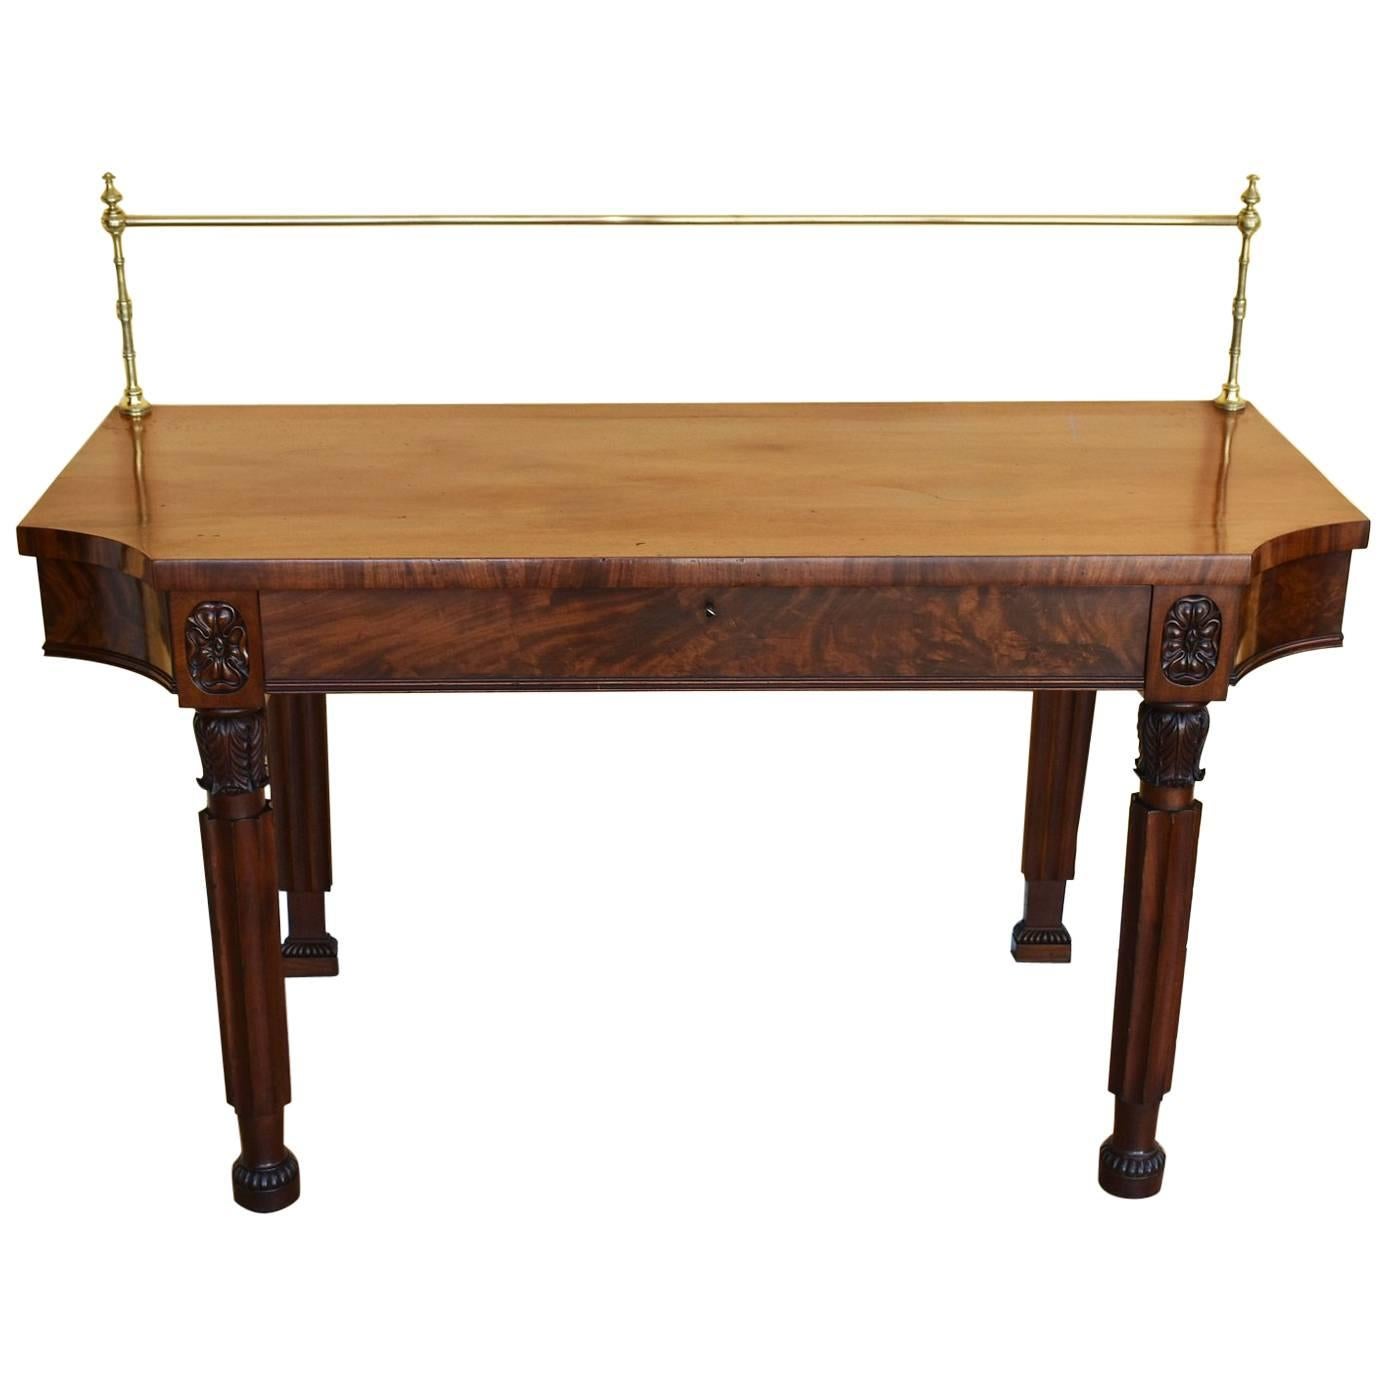 19th Century Regency Mahogany Serving Table/Sideboard